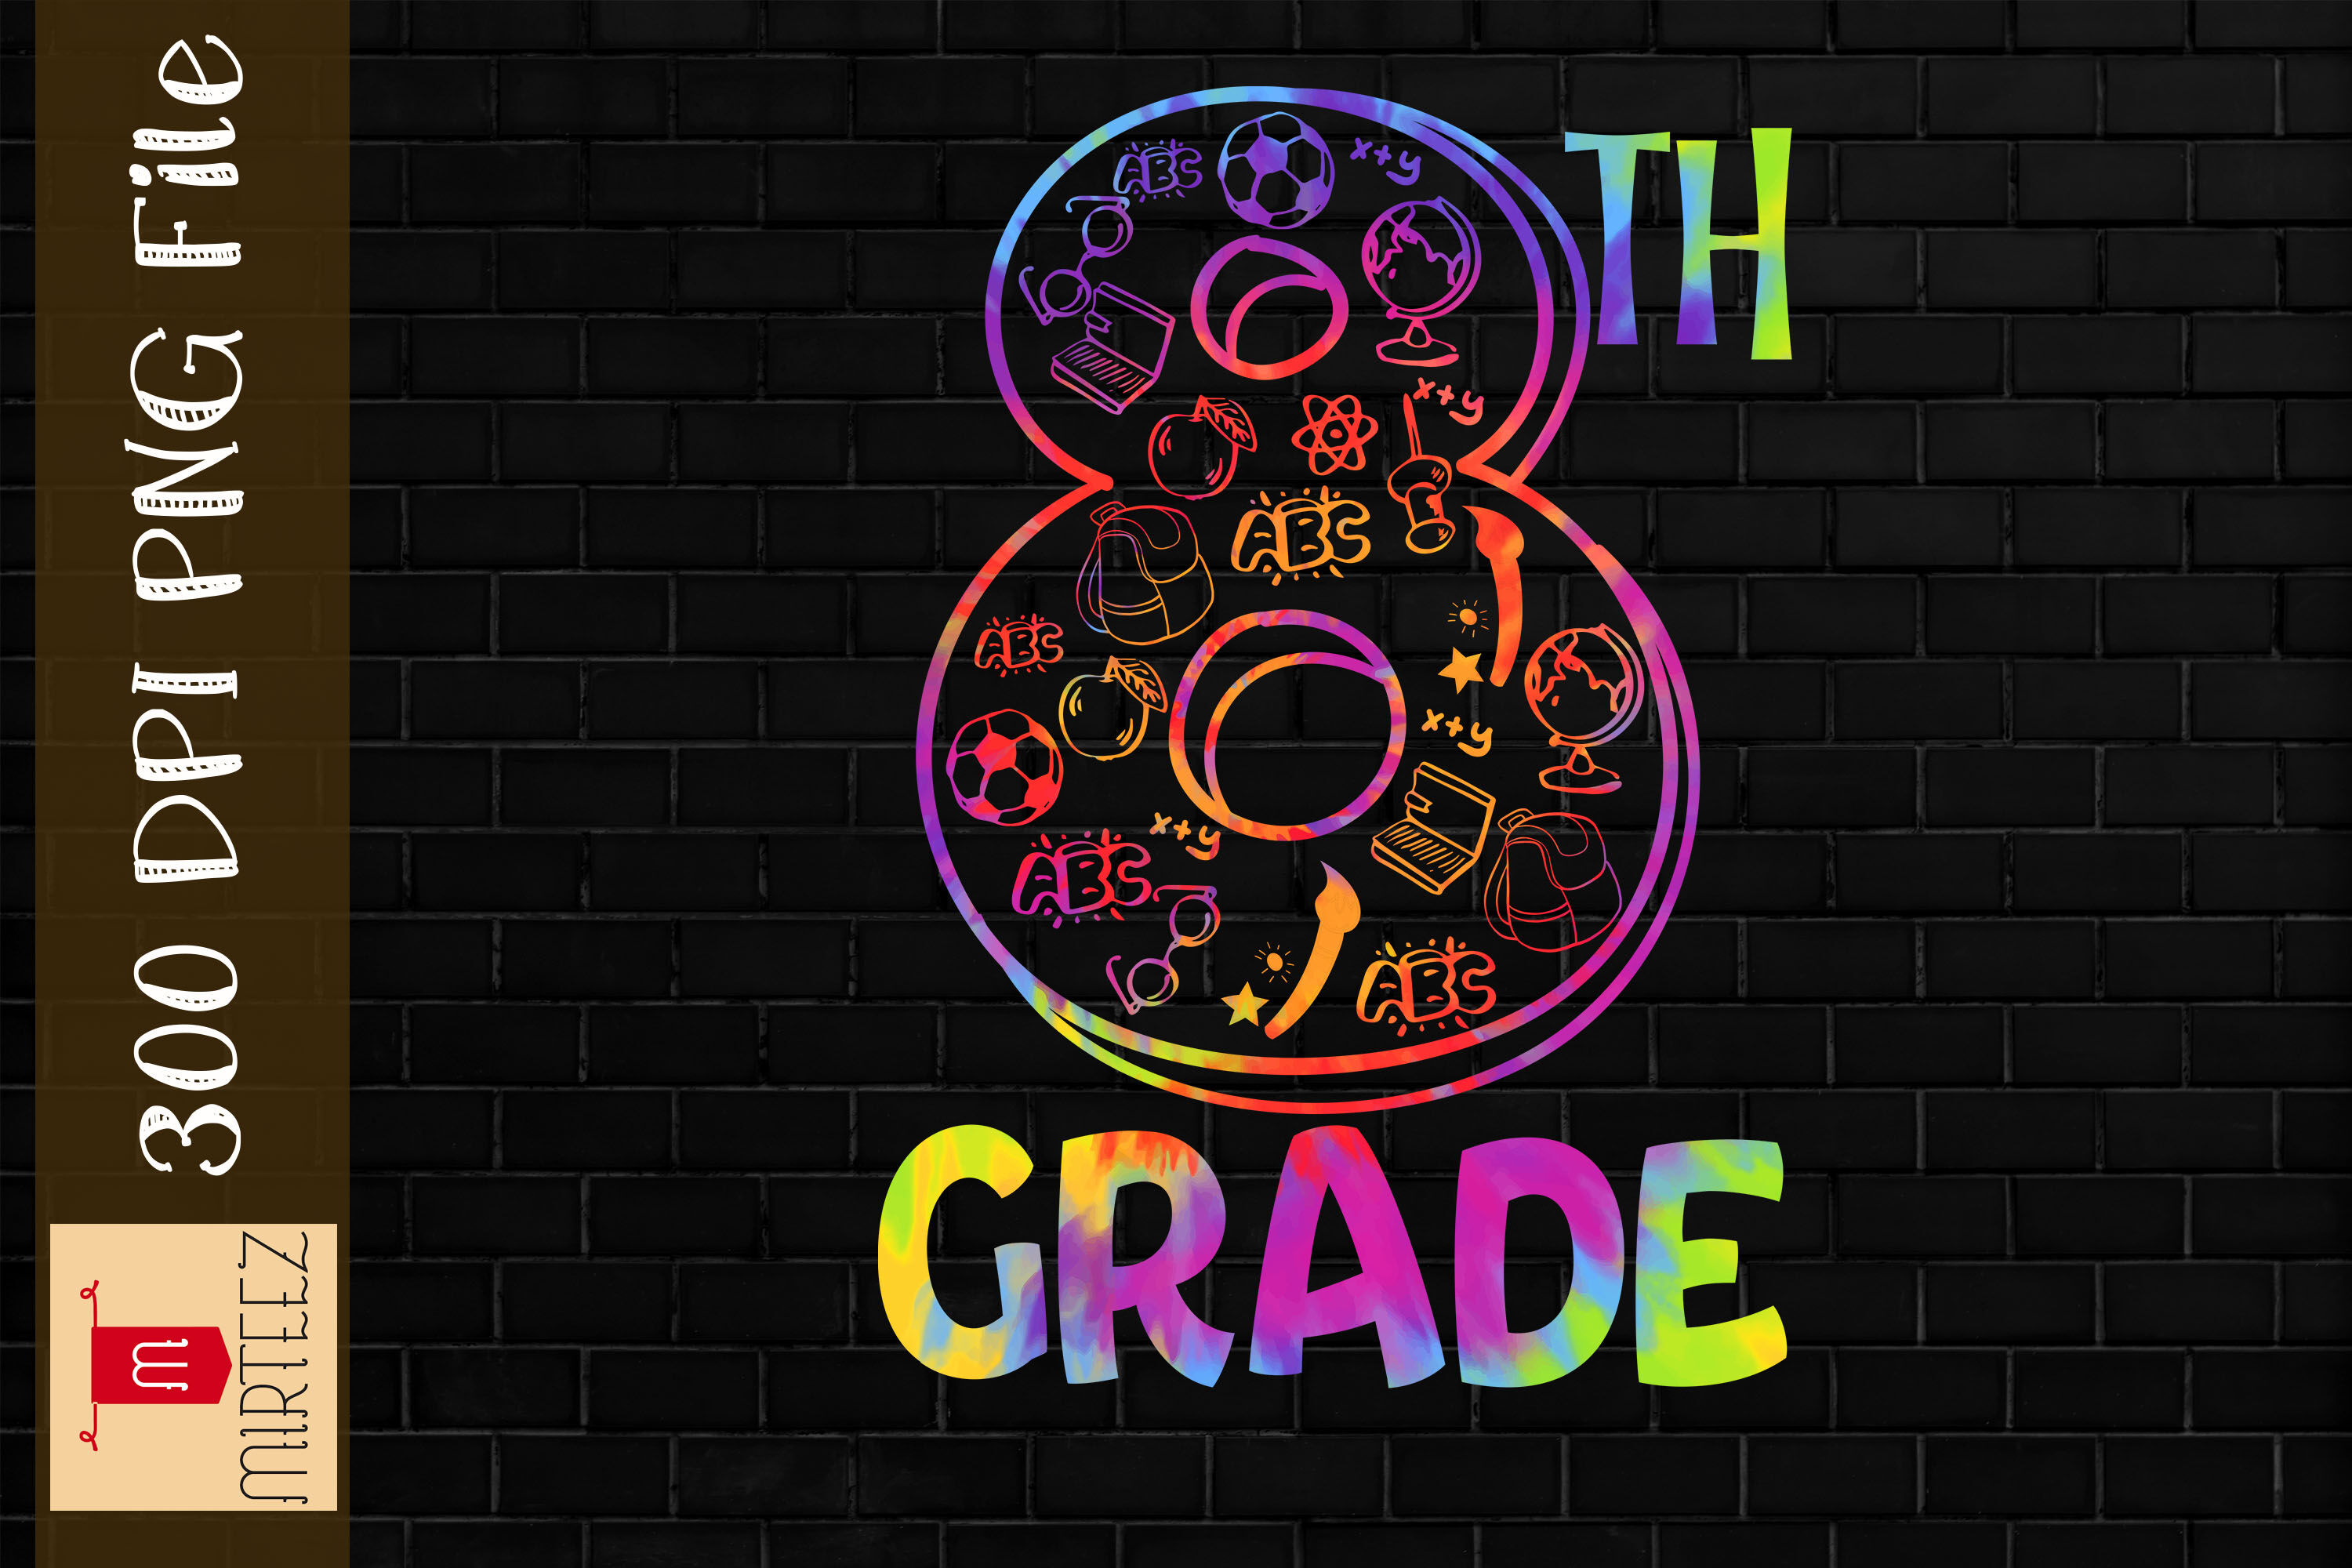 8th grade logo